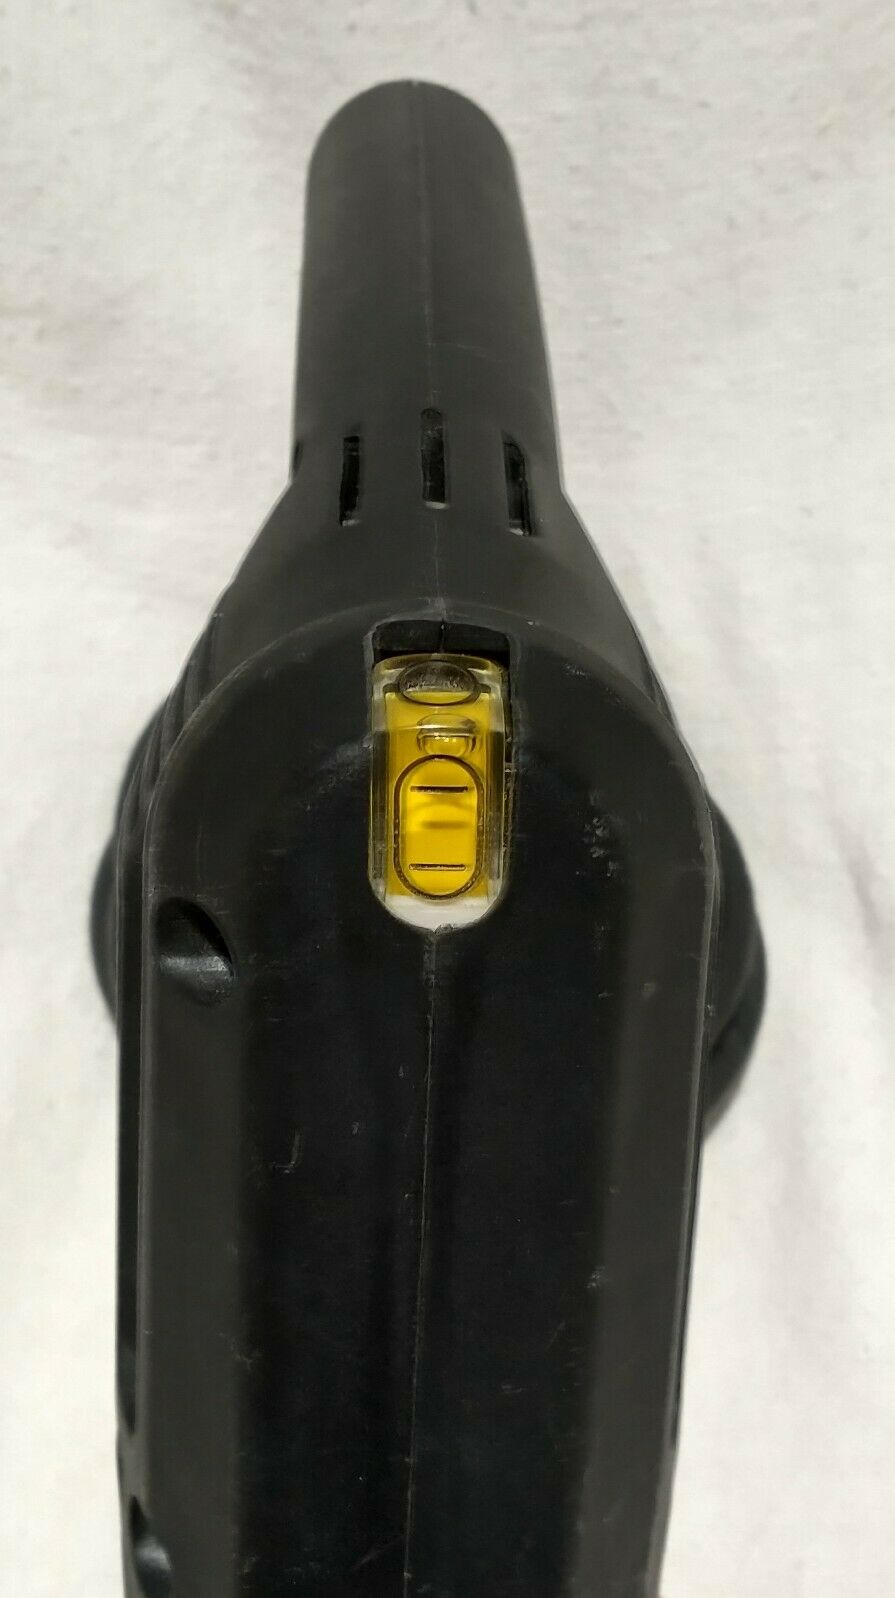 Black & Decker 3/8” Corded Drill Model 7193 w/ drill bits/ no key included